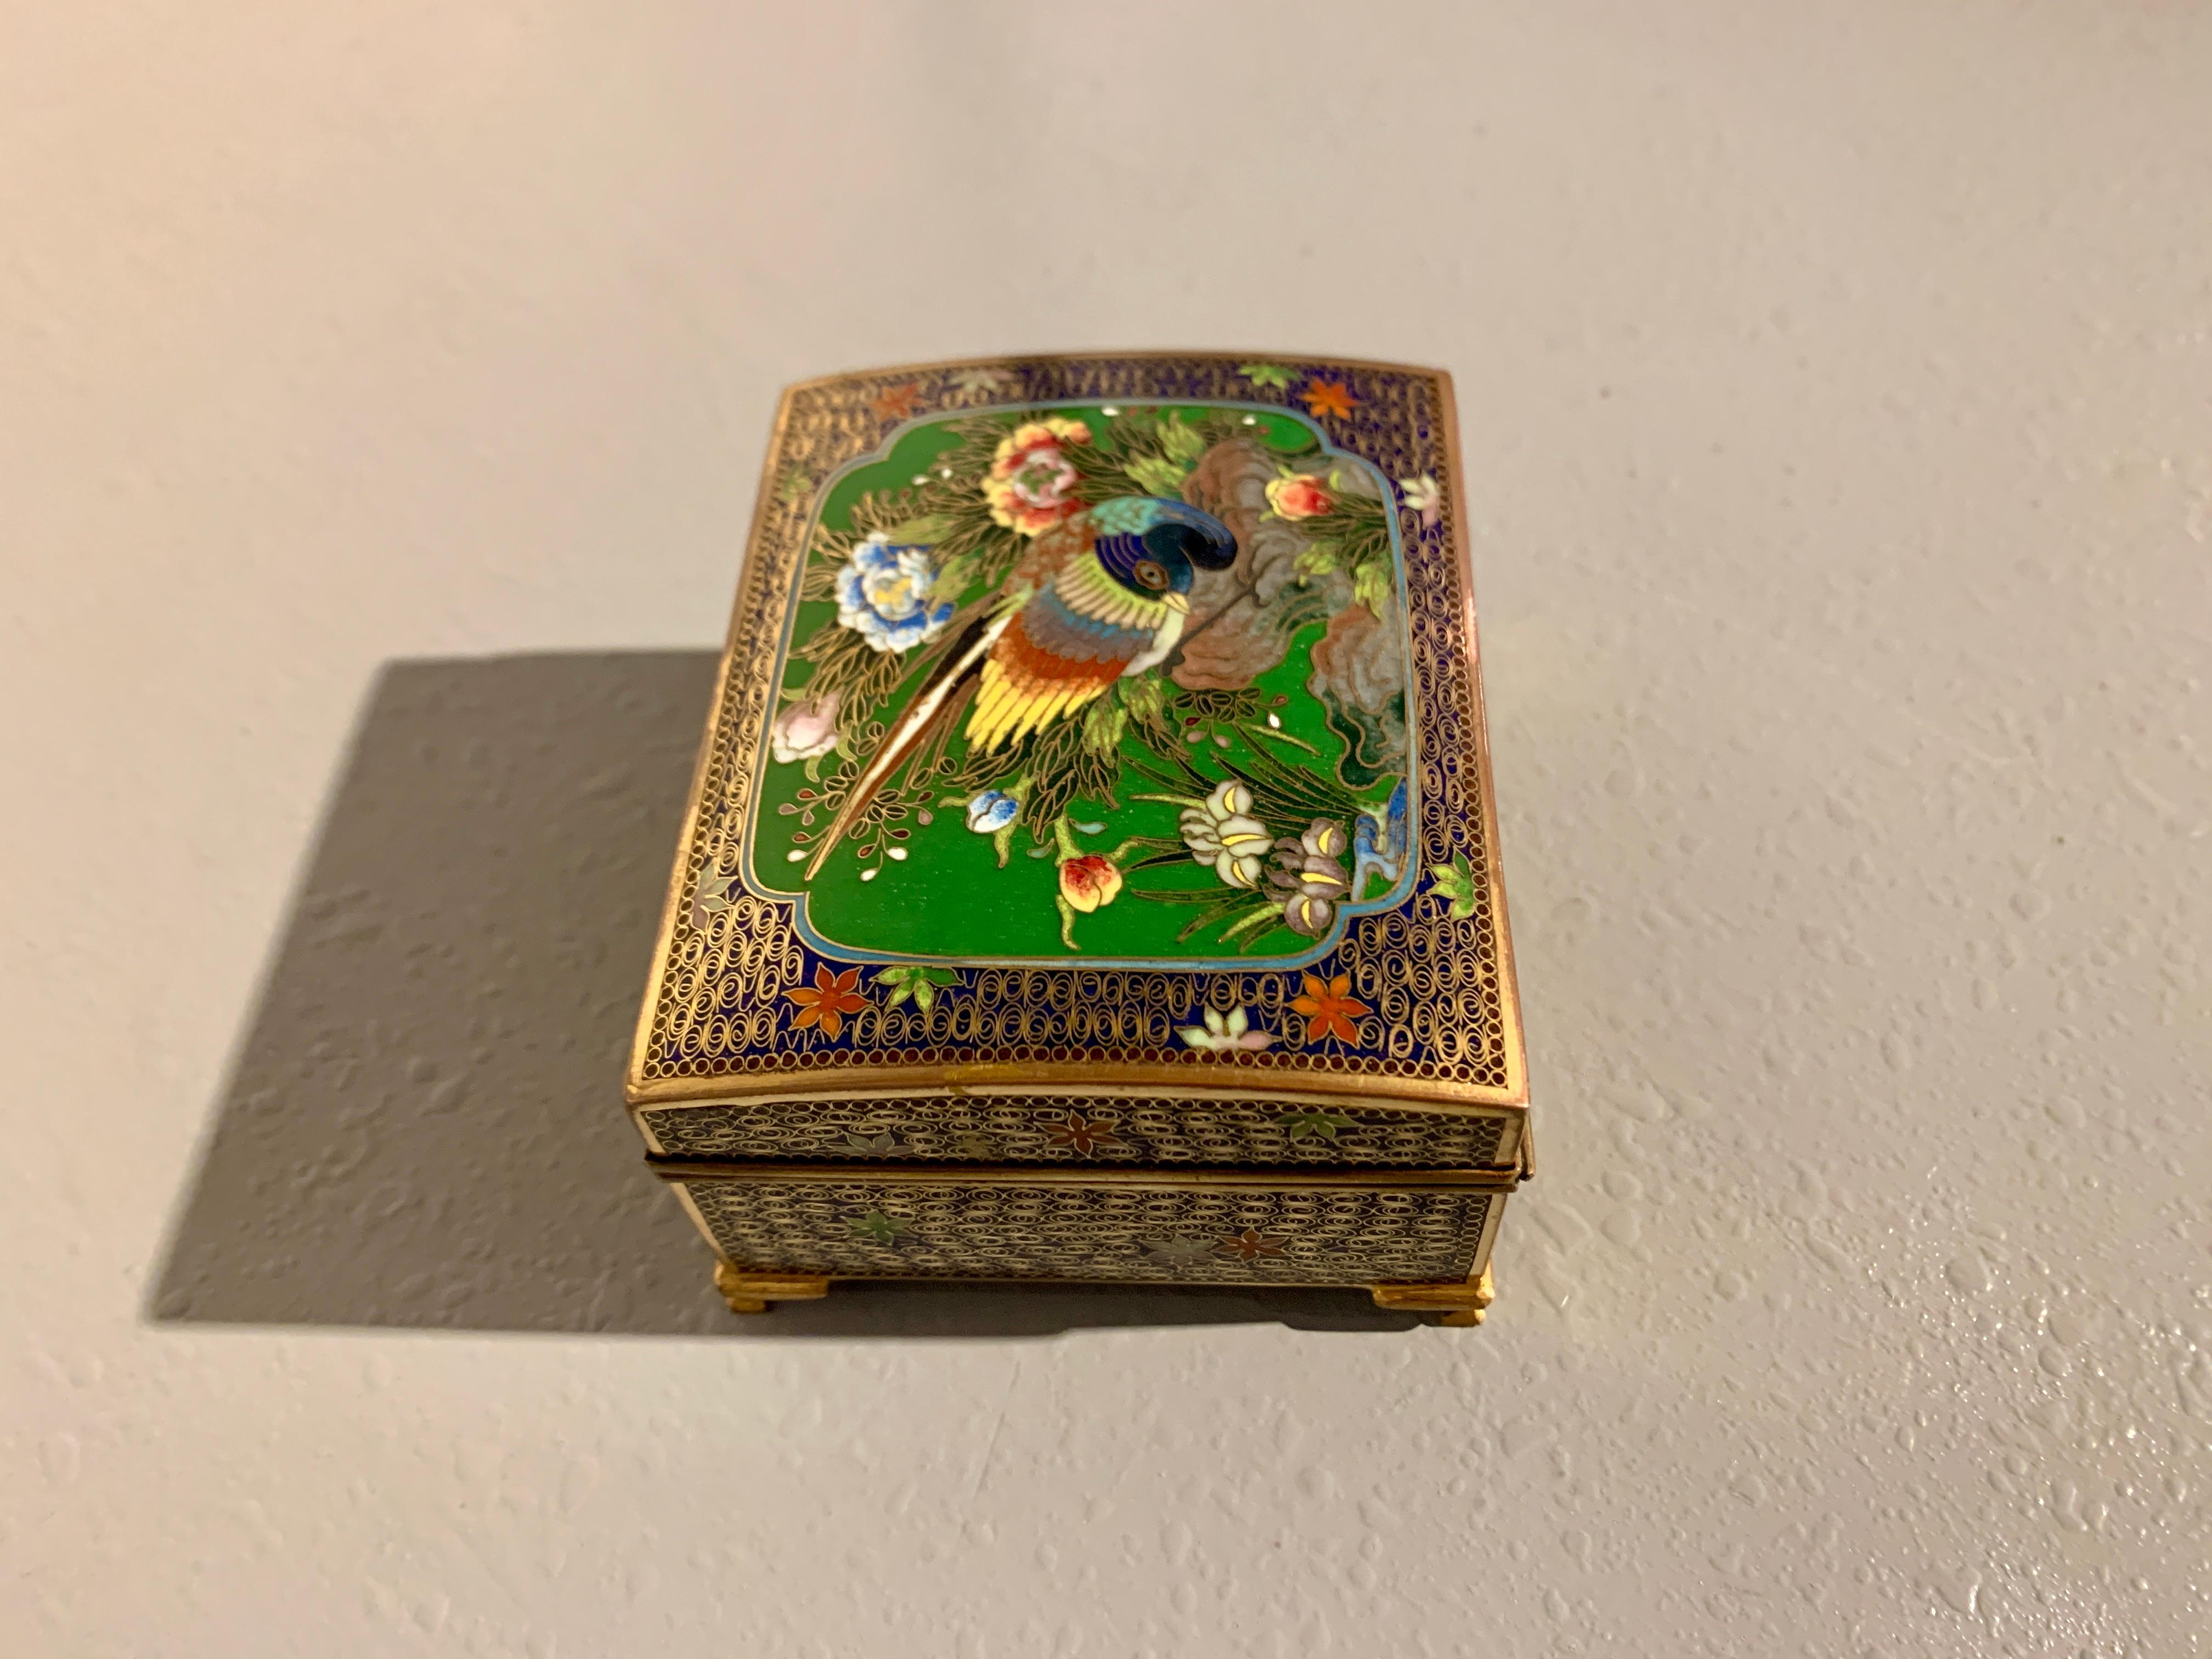 Cloissoné Small Japanese Cloisonne Enamel Trinket Box with Pheasant, Meiji Period, Japan